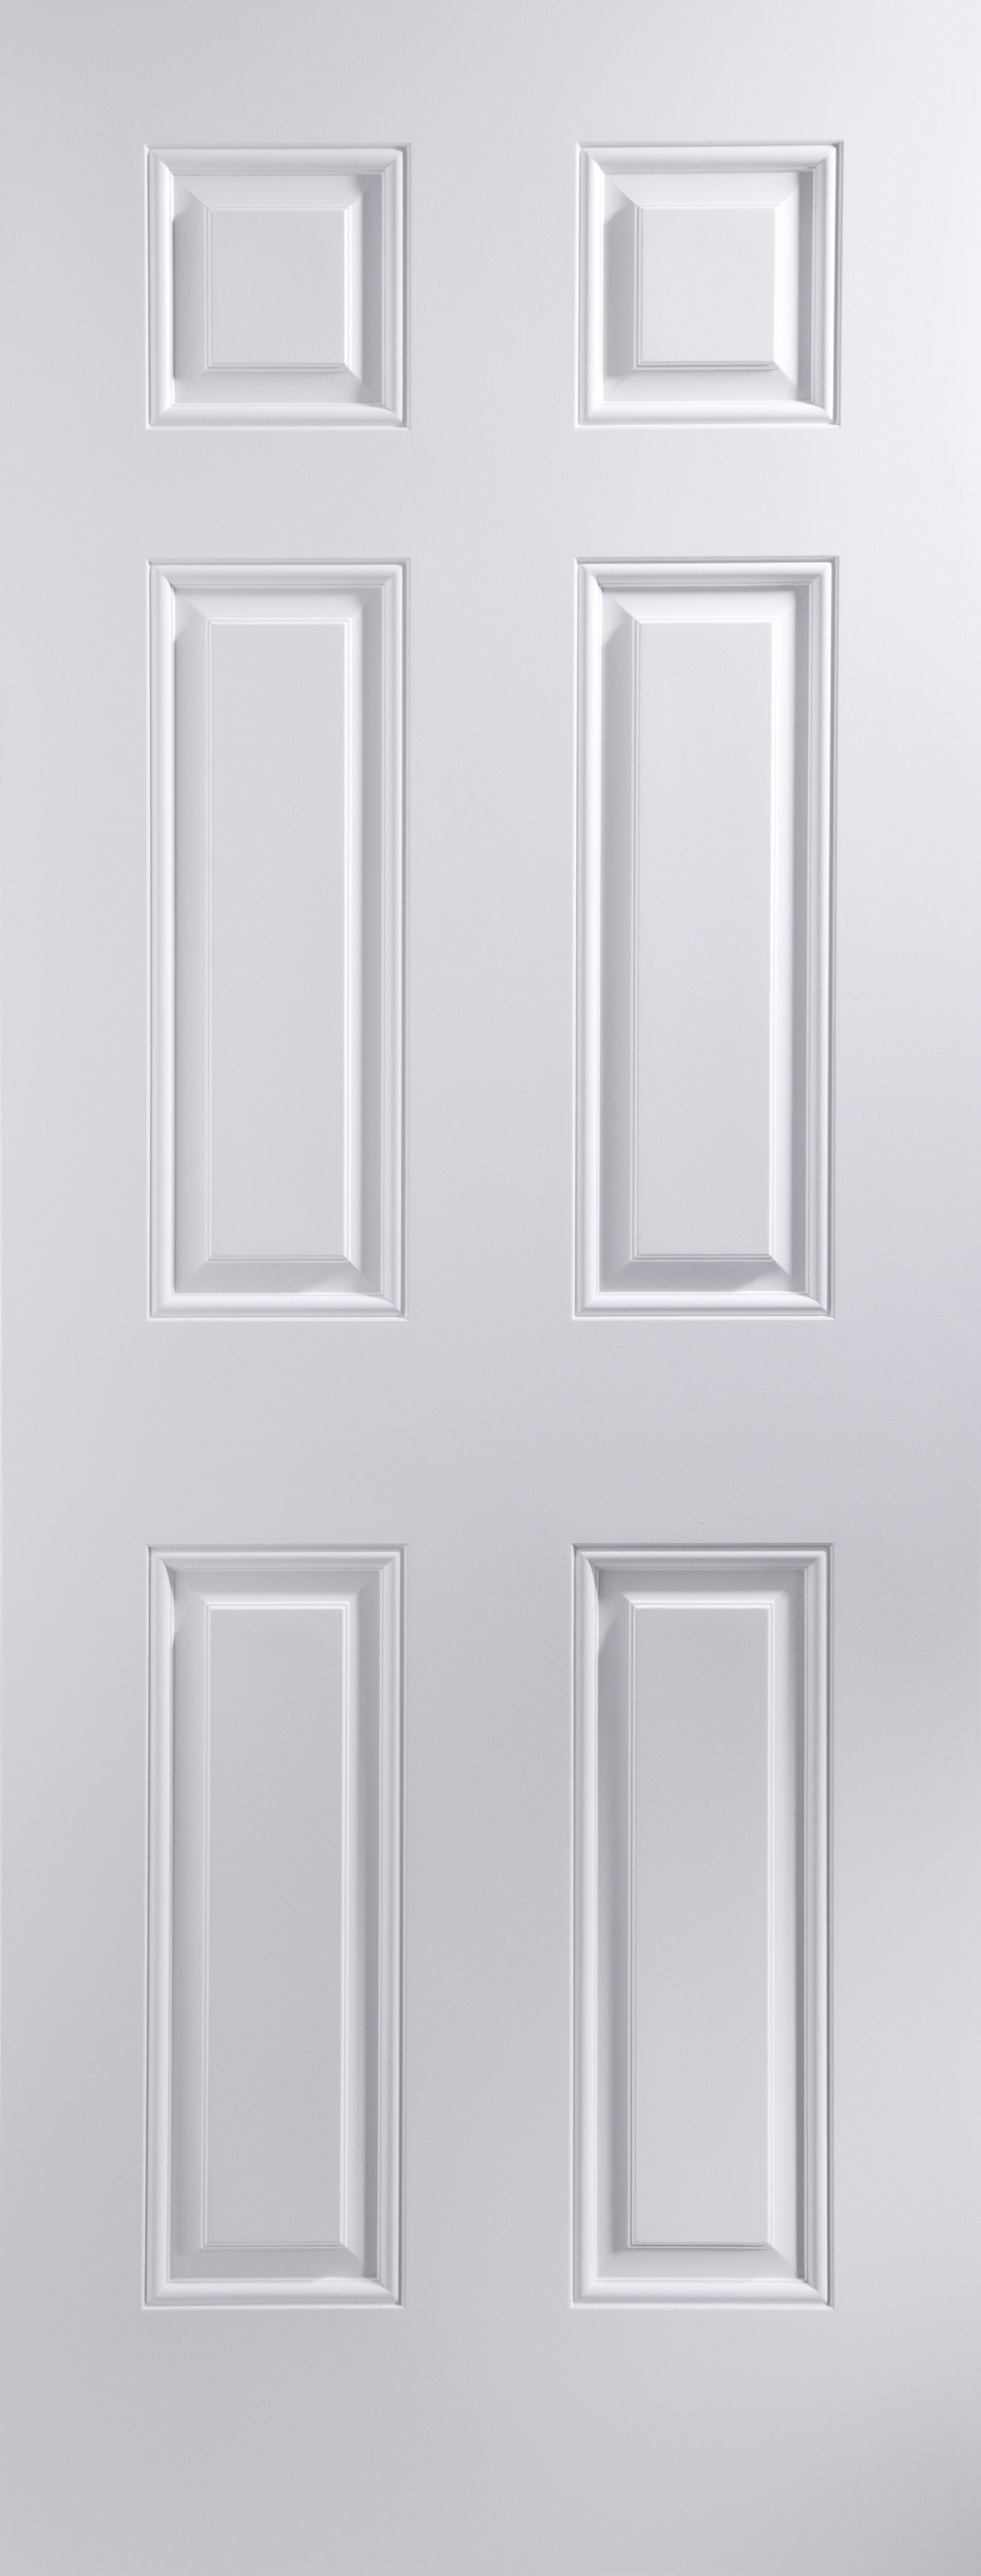 6 panel Unglazed White Internal Door, (H)1981mm (W)610mm (T)35mm